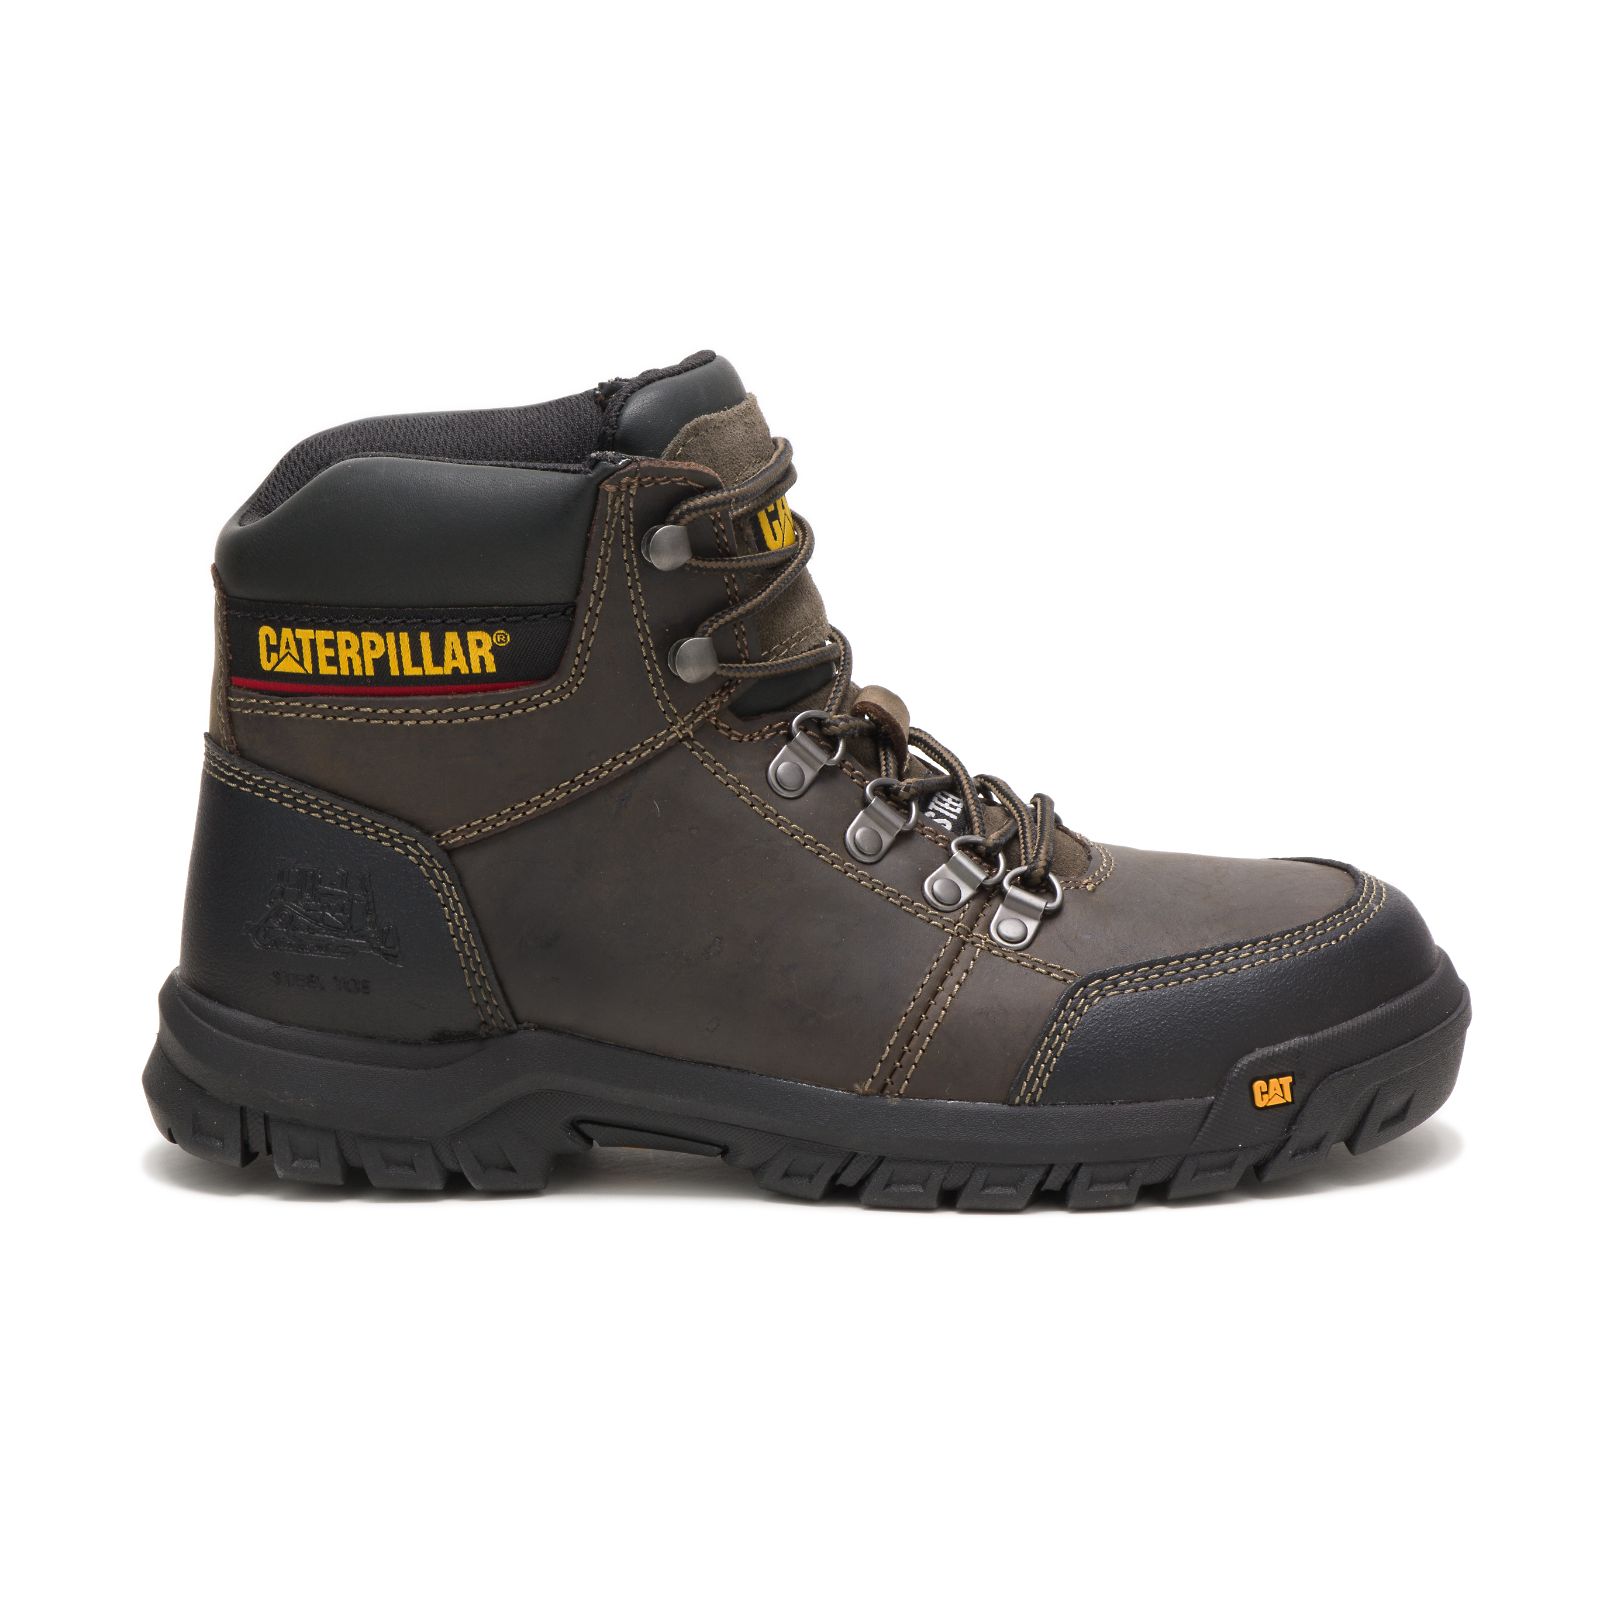 Caterpillar Outline Steel Toe Philippines - Mens Work Boots - Dark Grey 50642XGRB